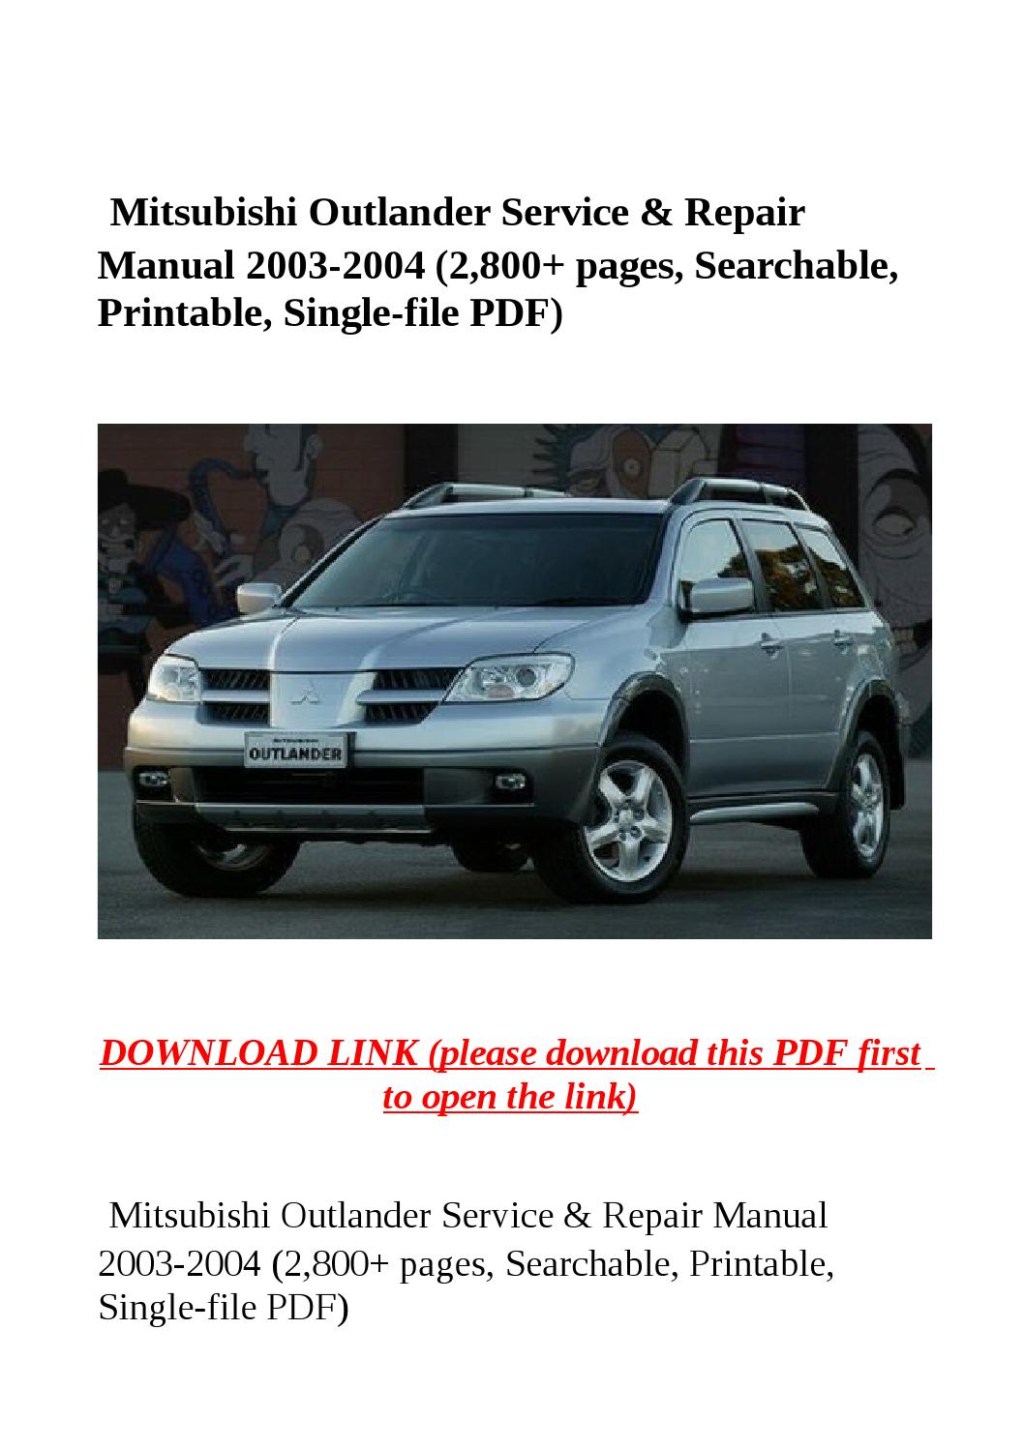 Picture of: Mitsubishi outlander service & repair manual   (,